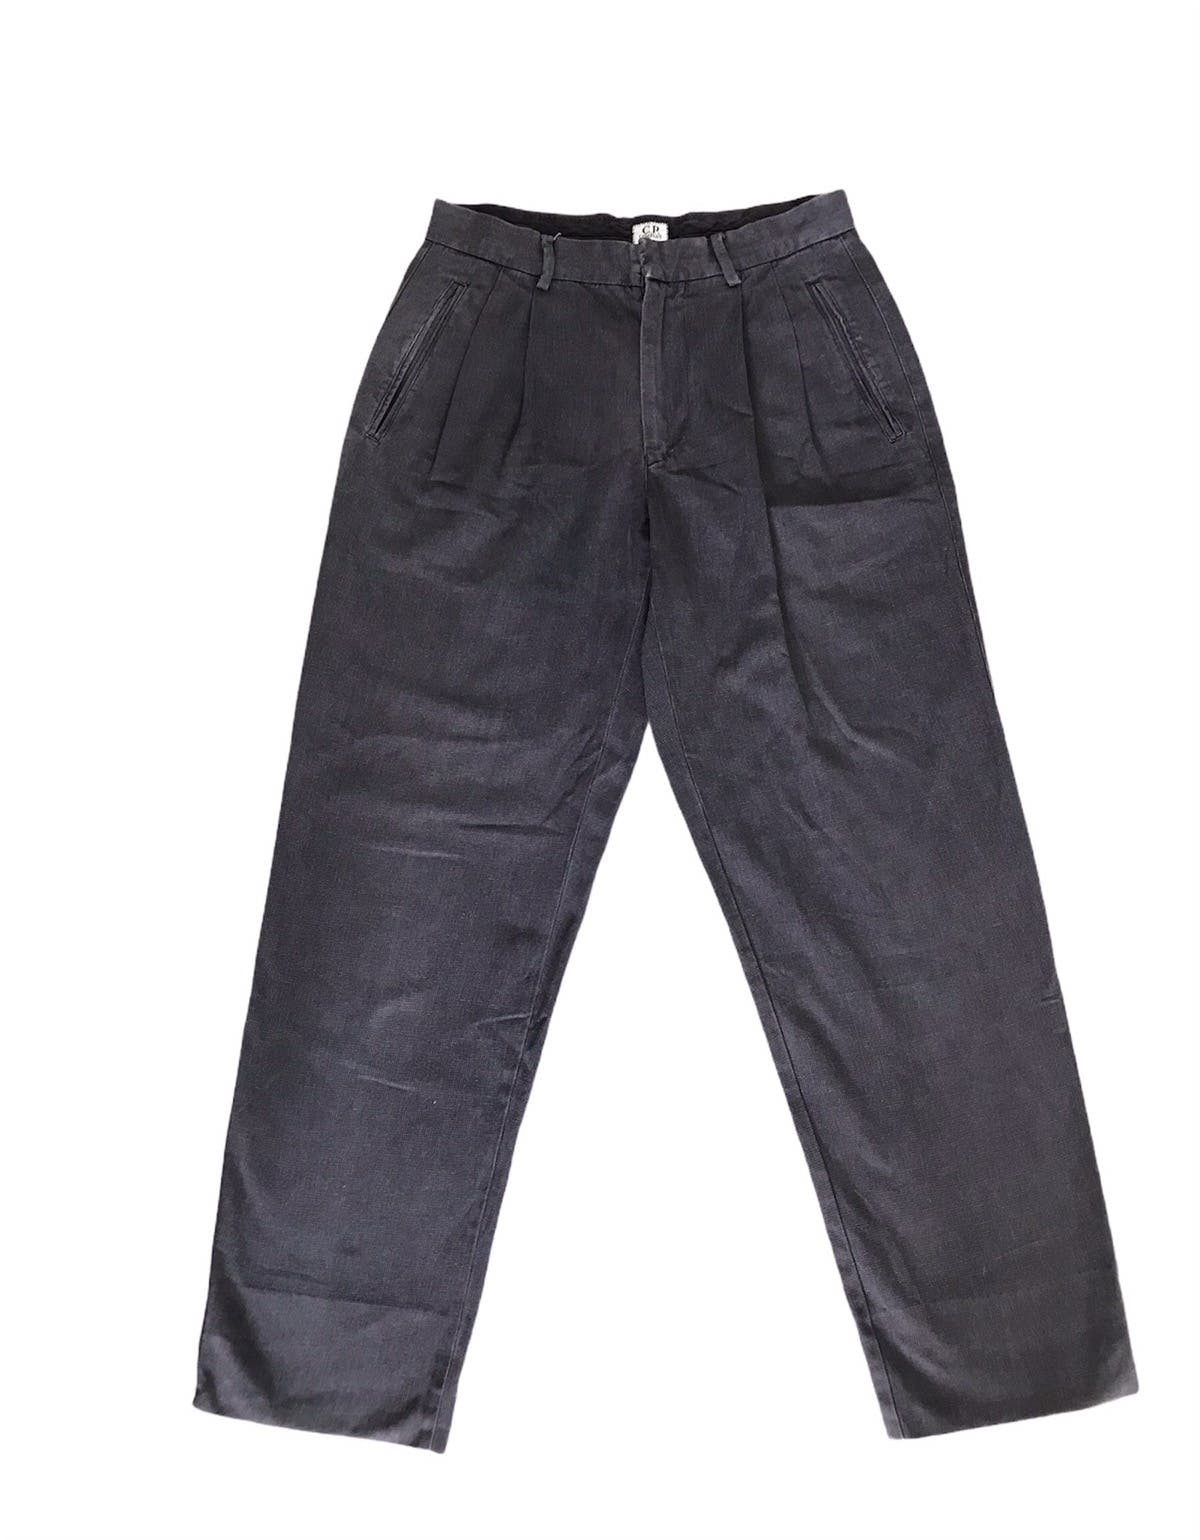 Vintage C.p.company pants - 1